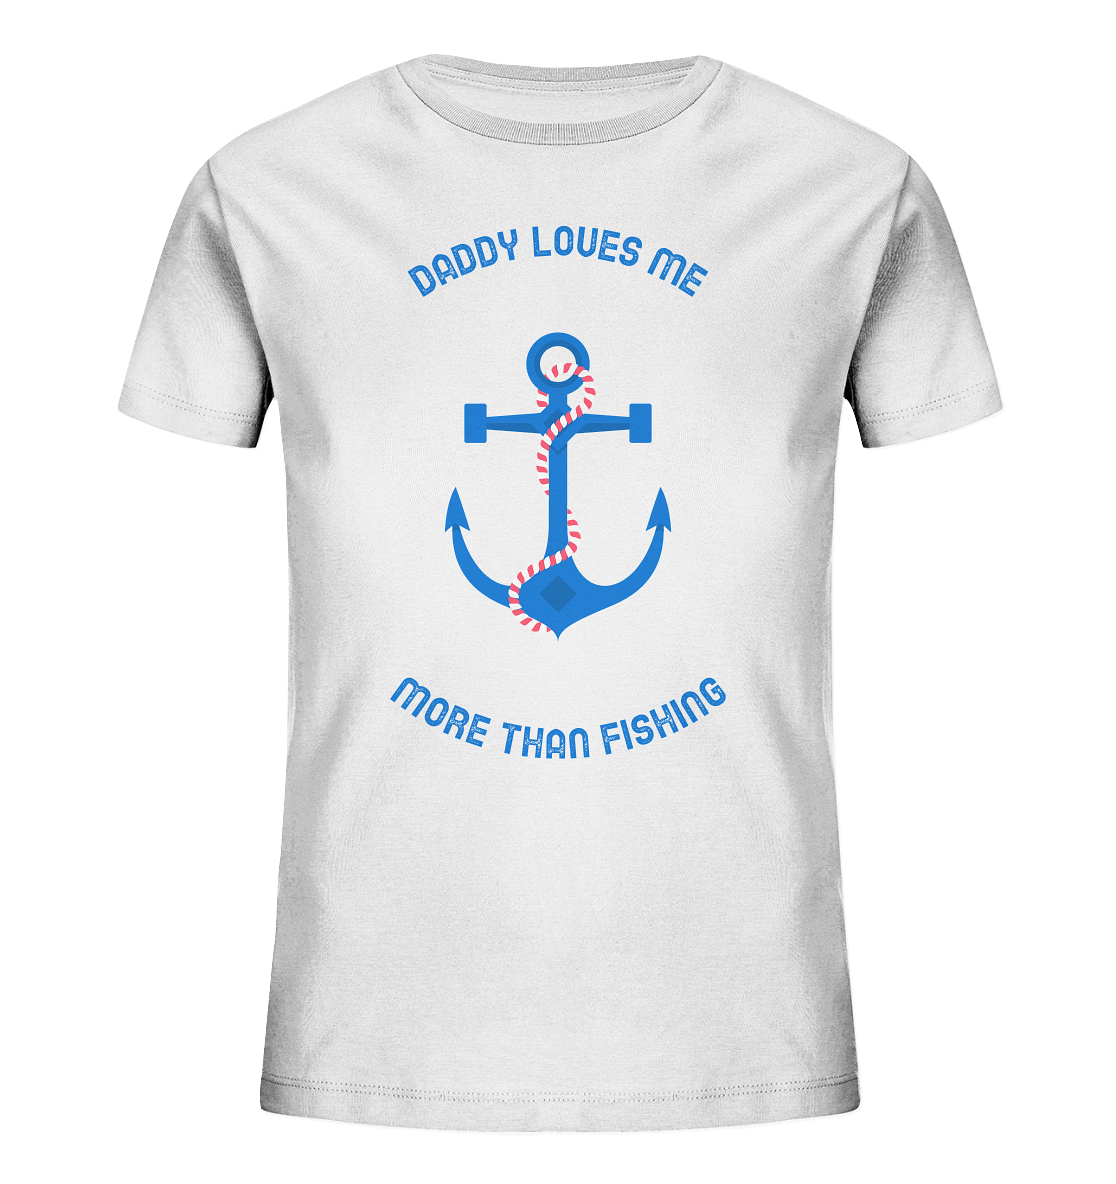 Kinder T-Shirt in weiß mit Anker Muster und der Beschriftung "Daddy loves me more than fishing."